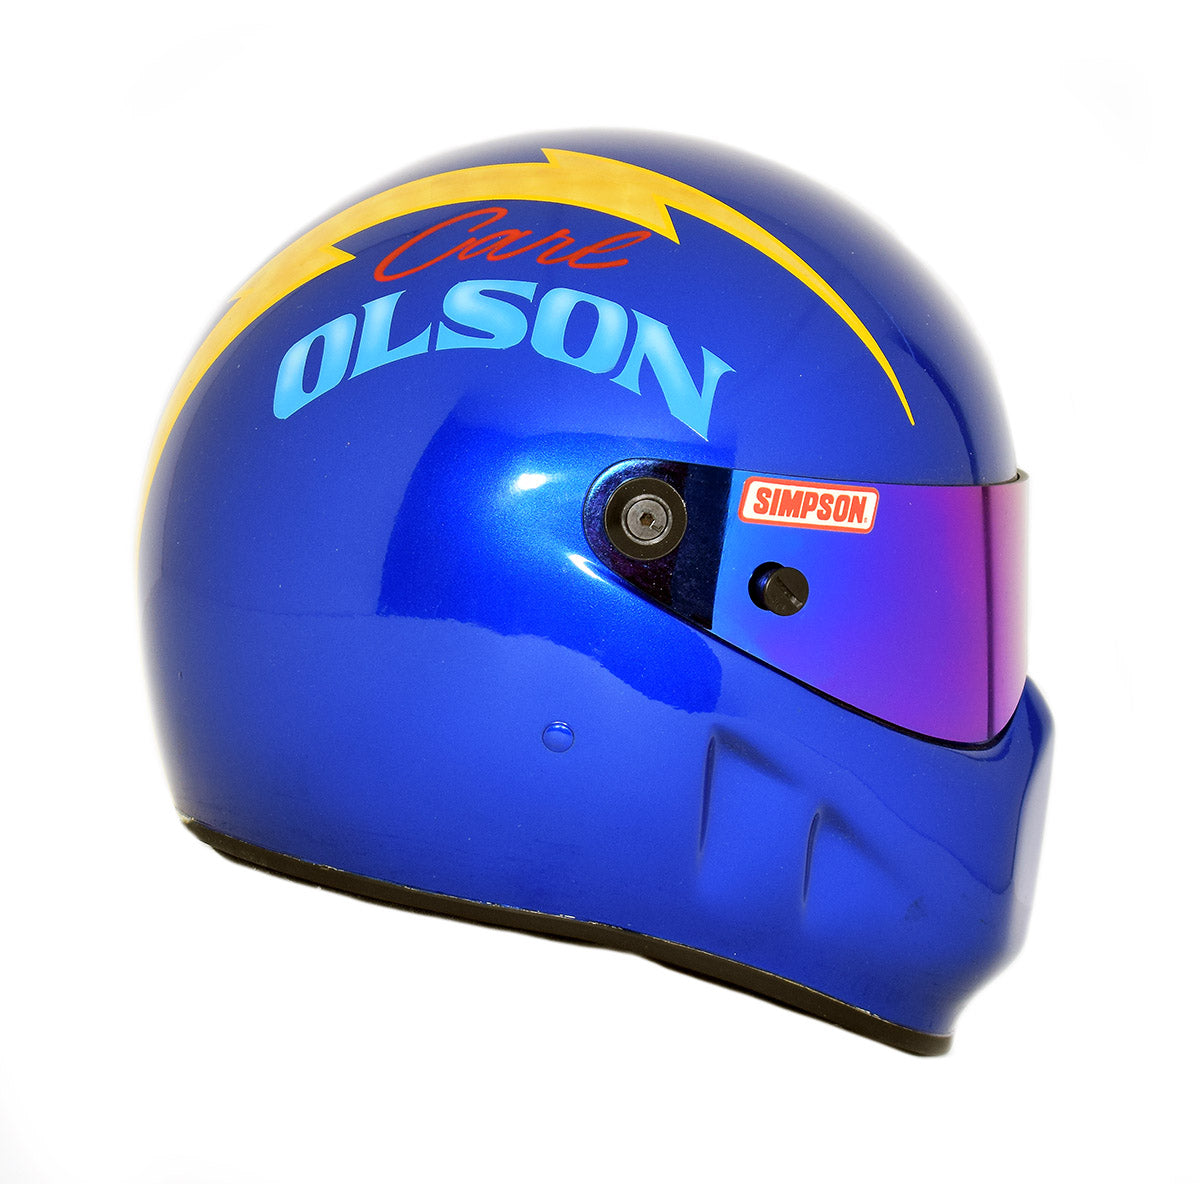 1970's Carl Olson Top Fuel Drag Racing Replica Helmet